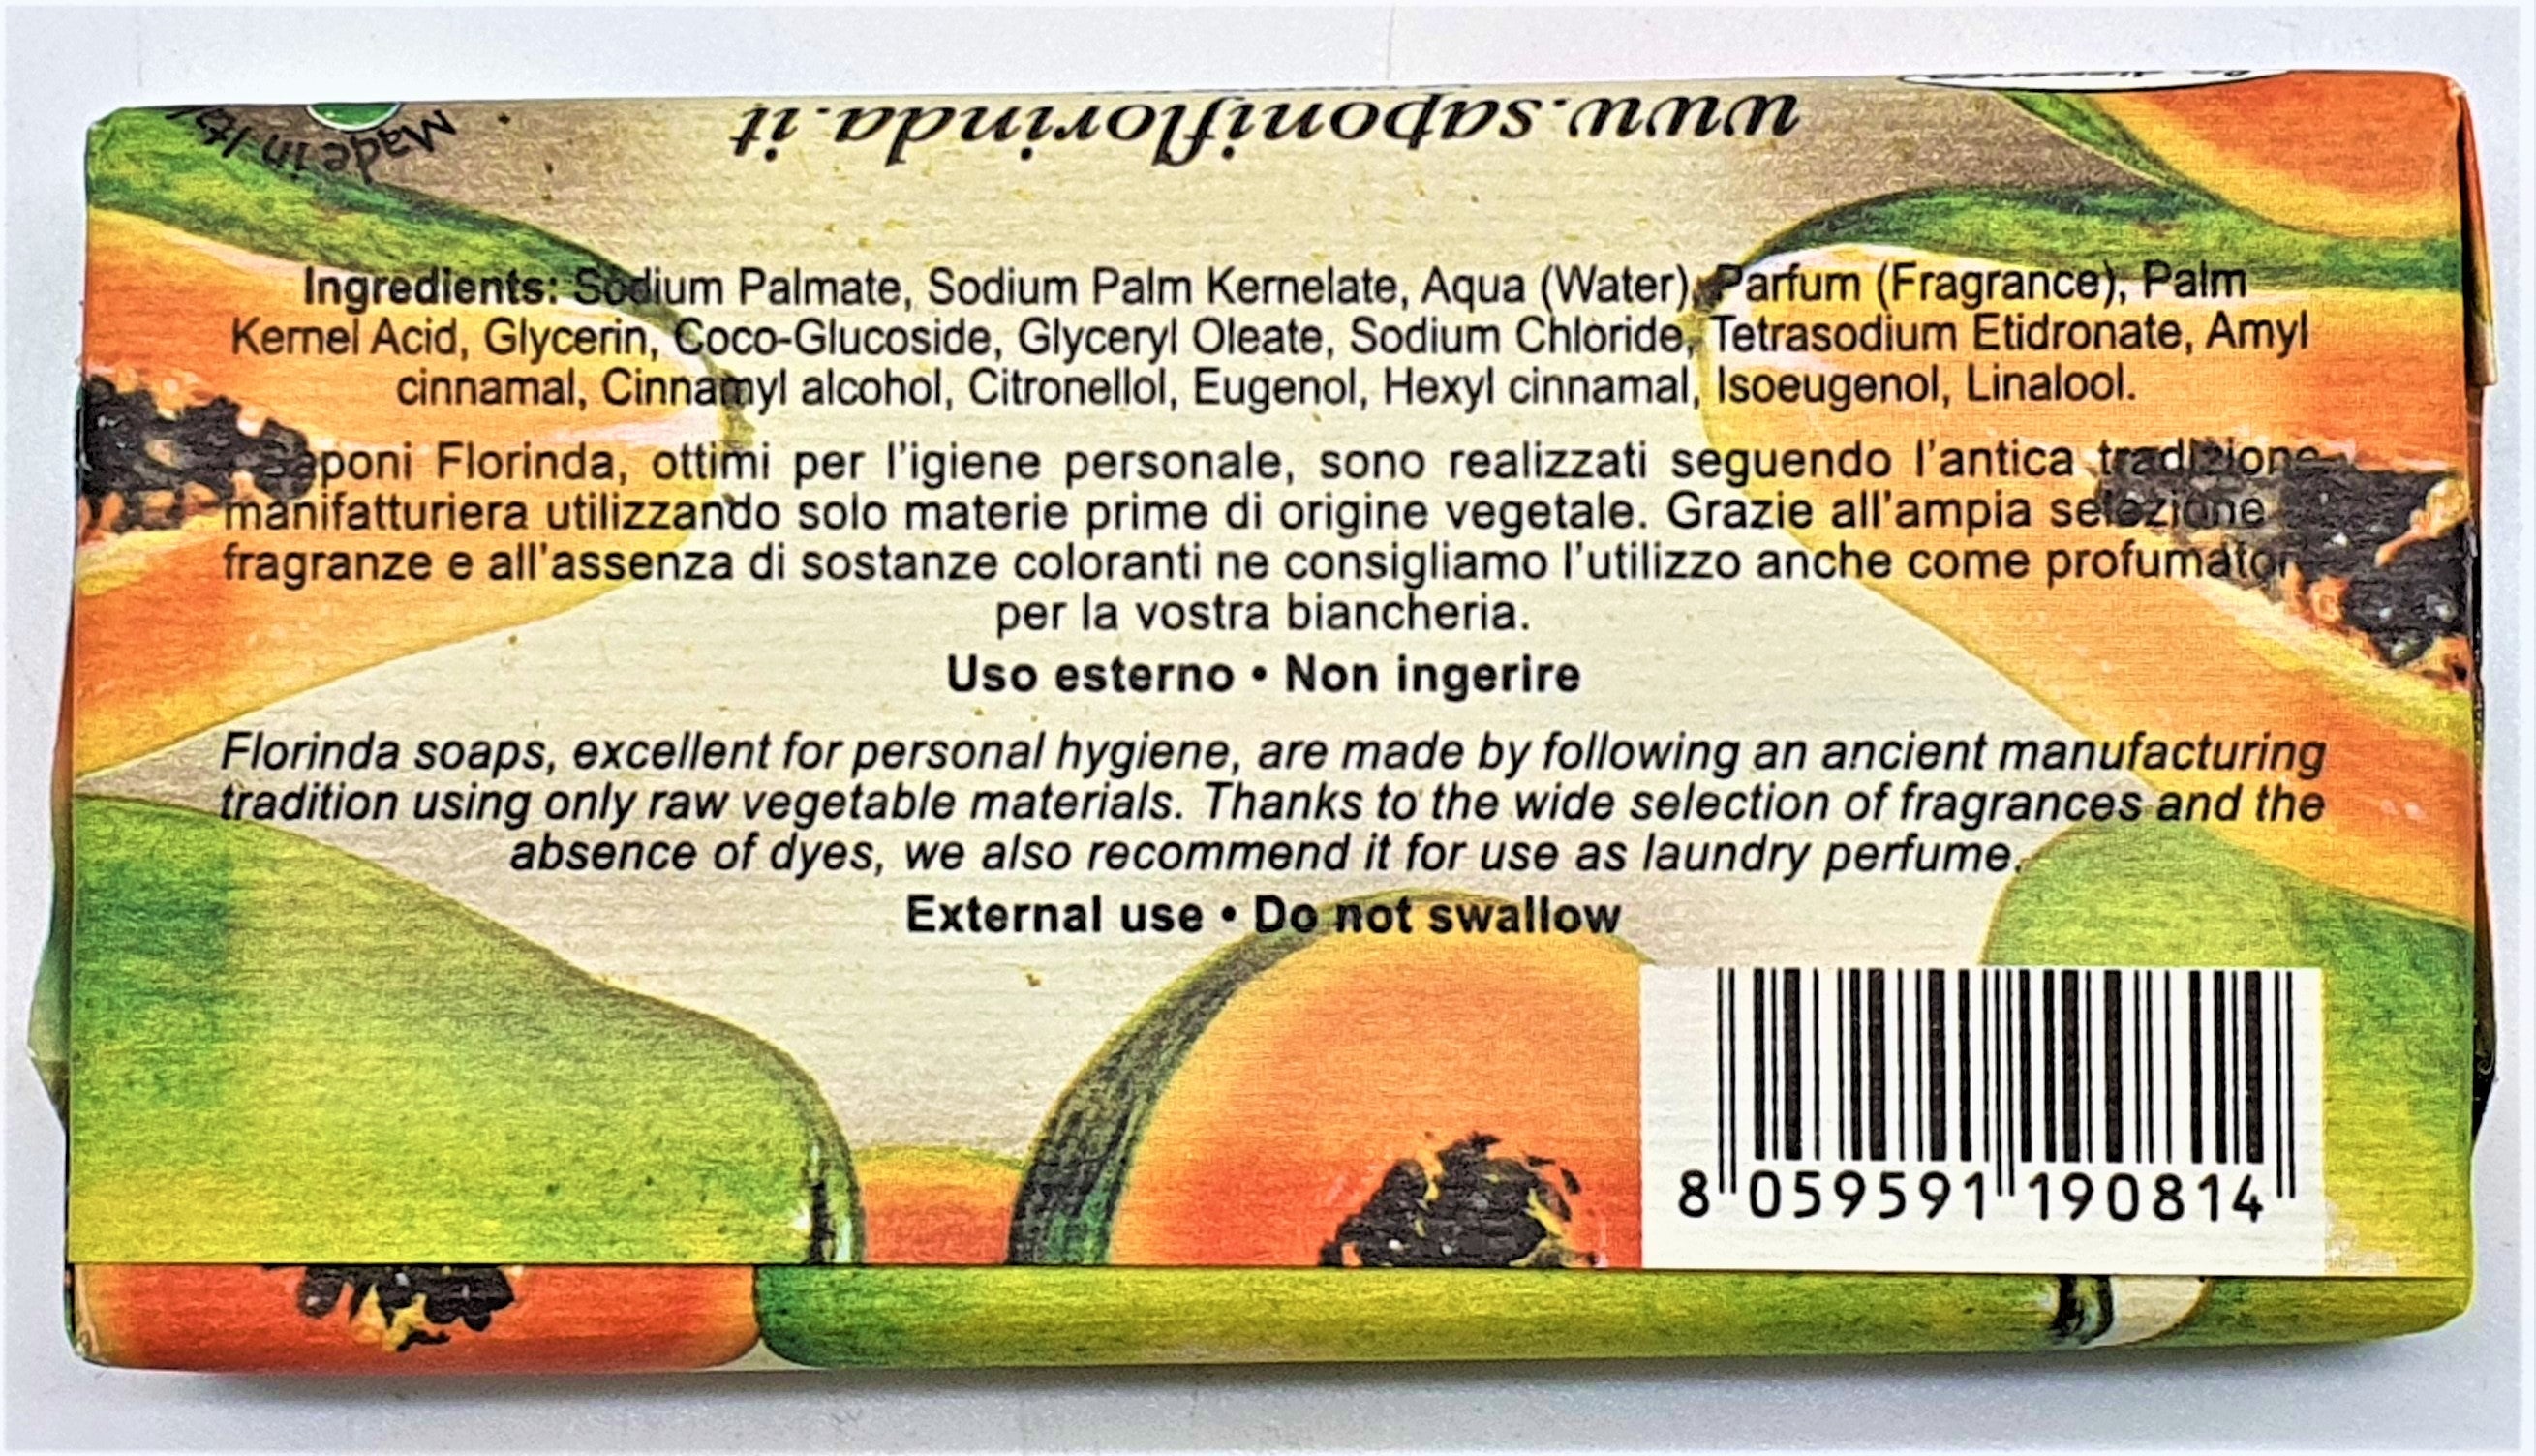 Papaya Vegetable Soap